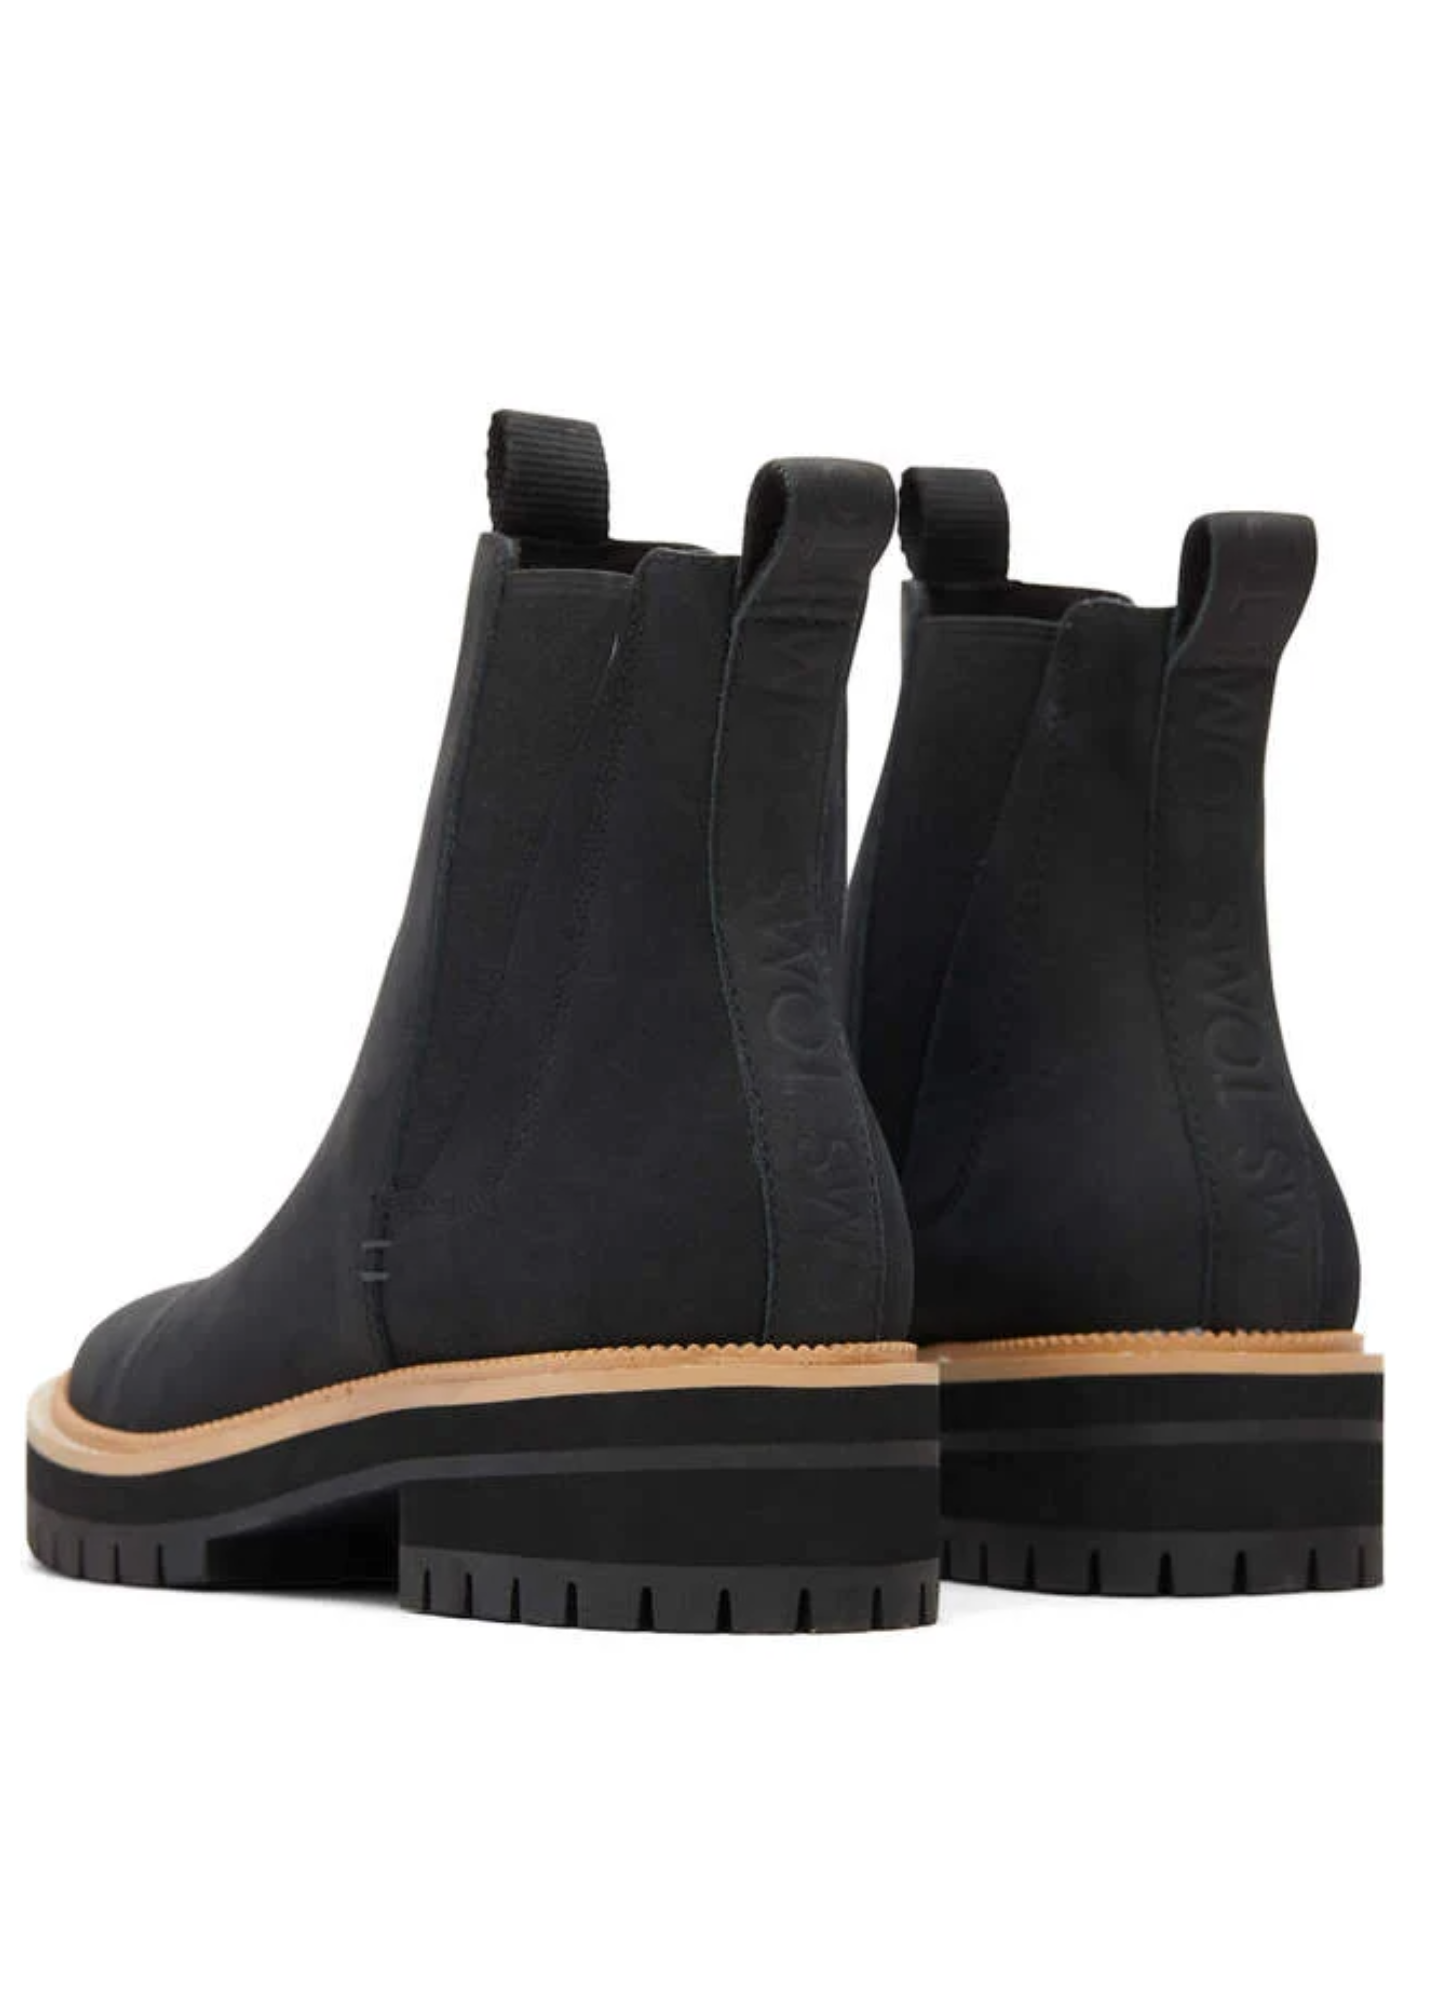 TOMS® Dakota Black Leather Boots Shoes